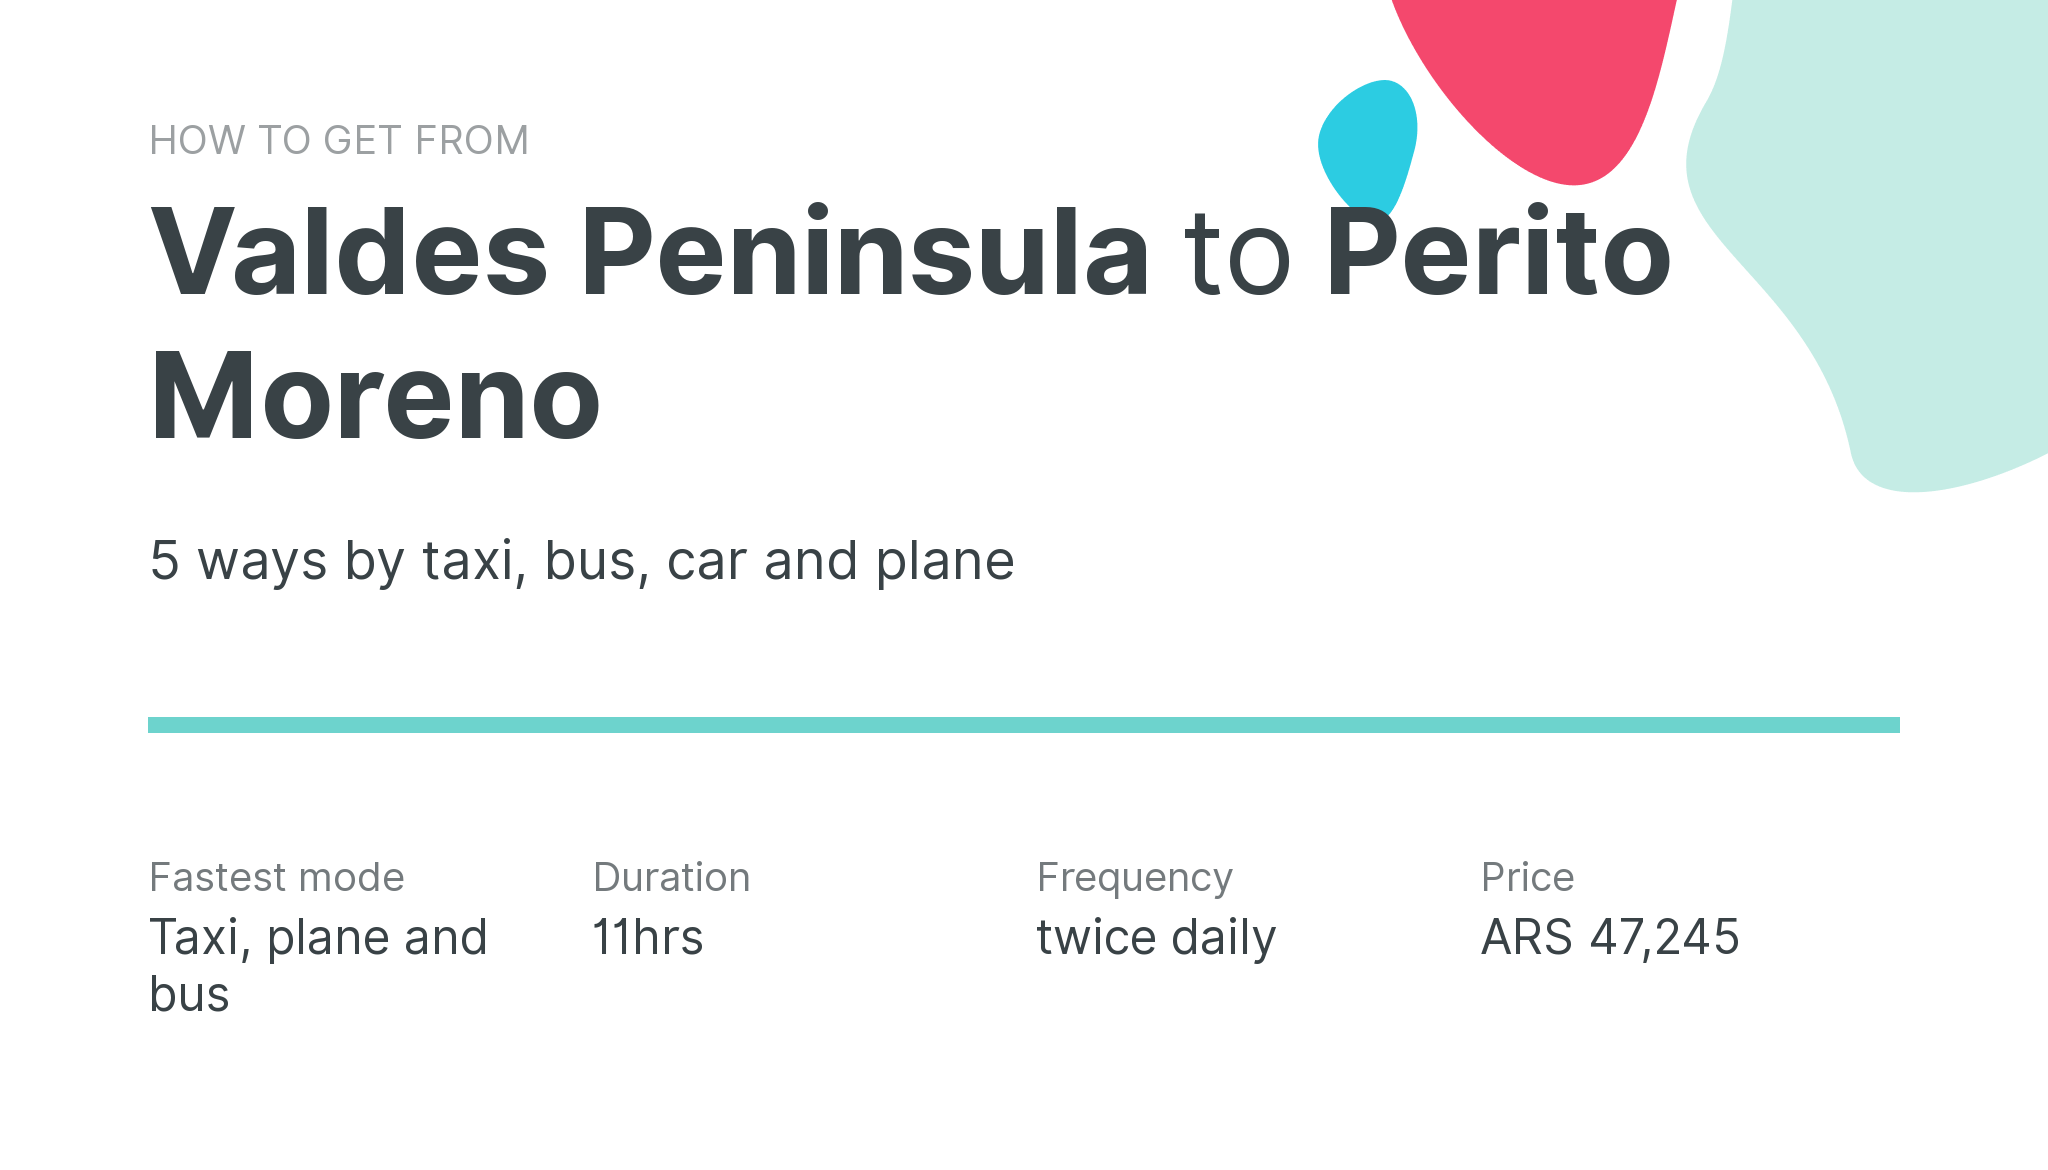 How do I get from Valdes Peninsula to Perito Moreno